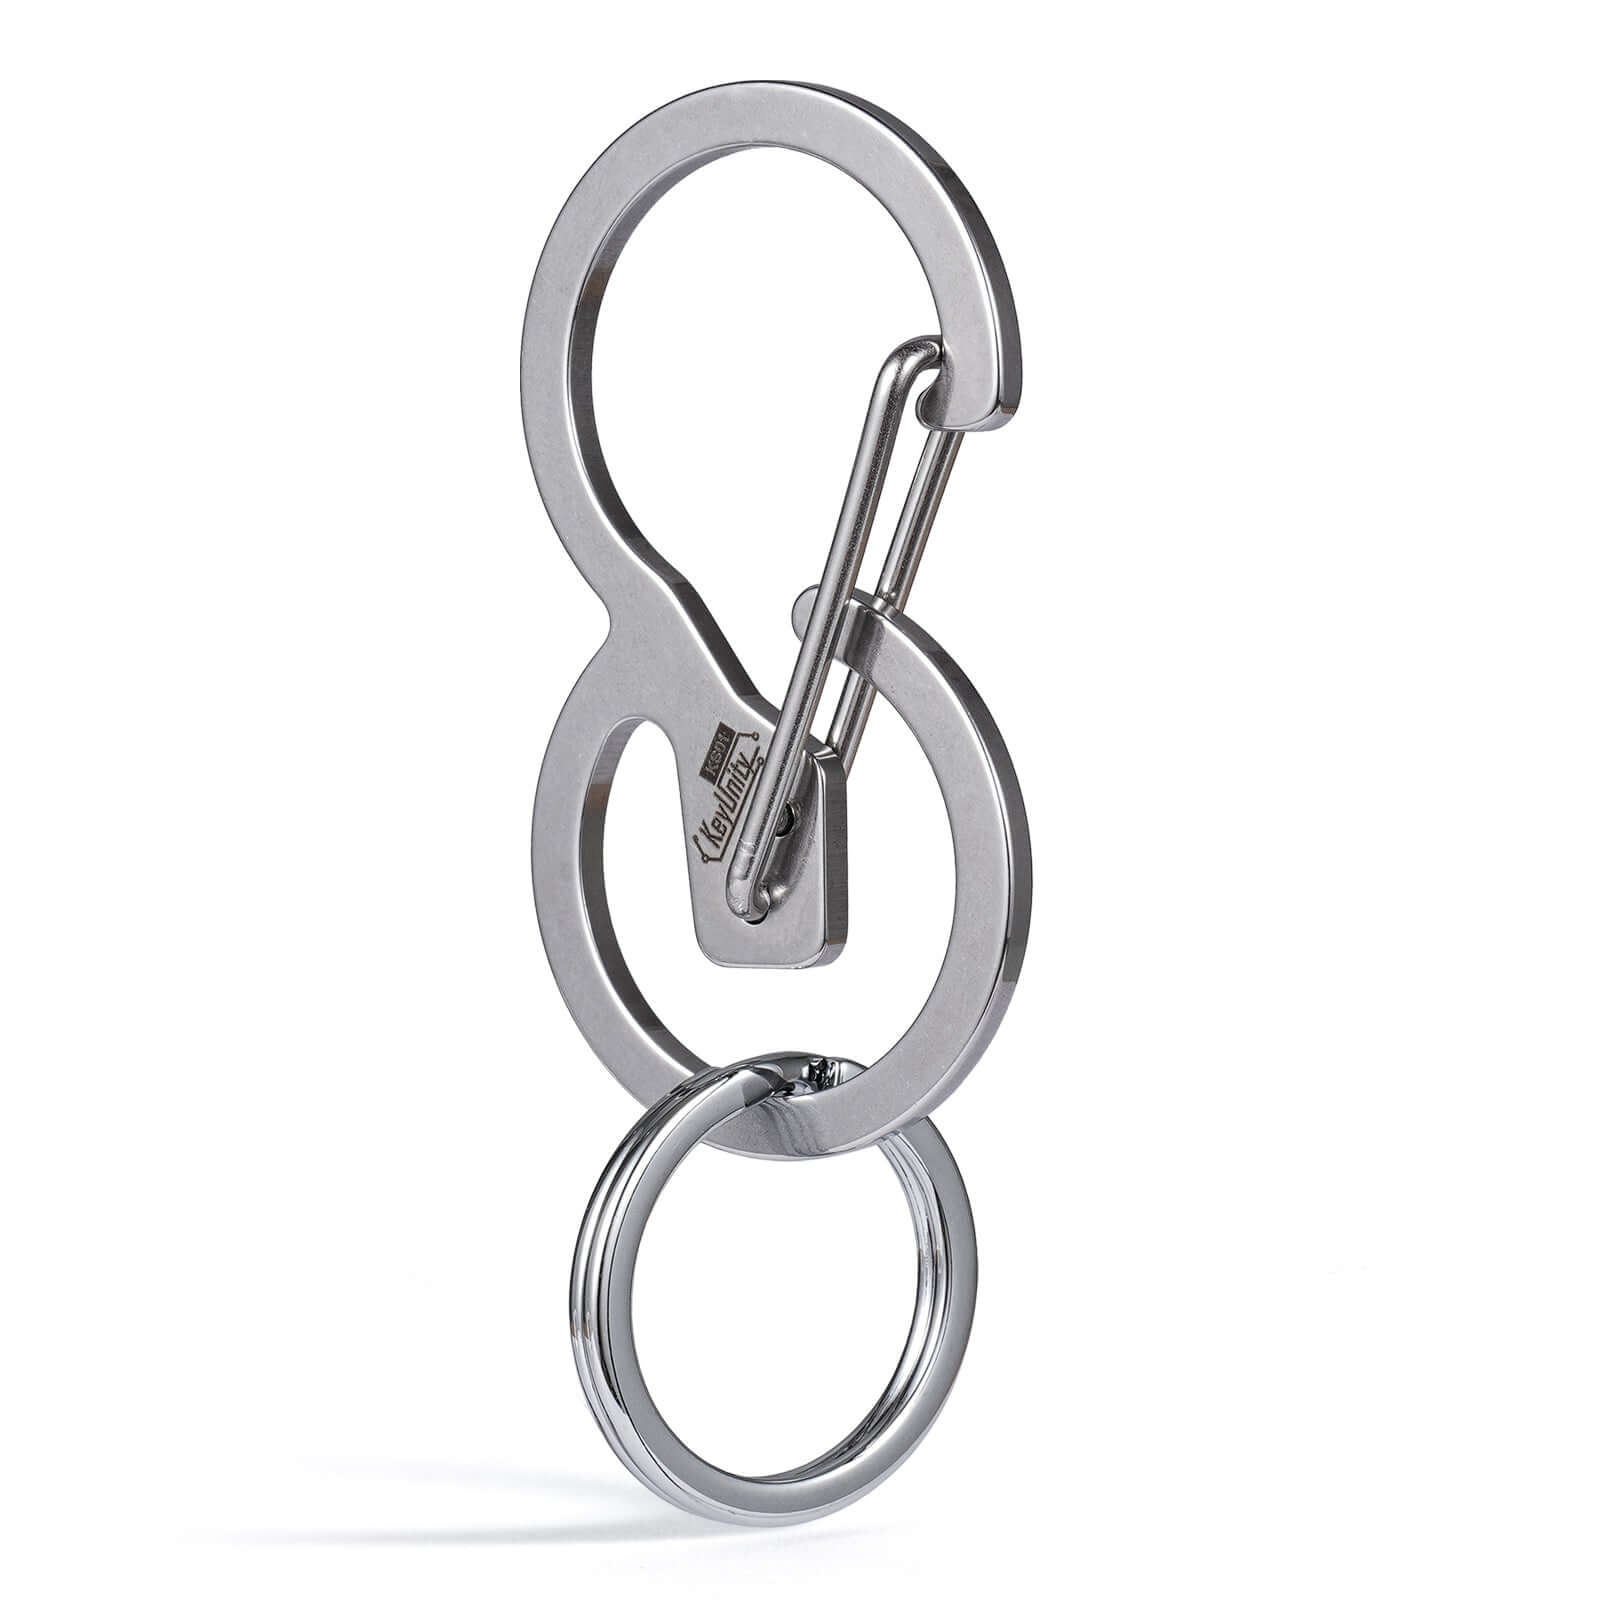 KeyUnity KS01 Quick Release Keychain Carabiner clip